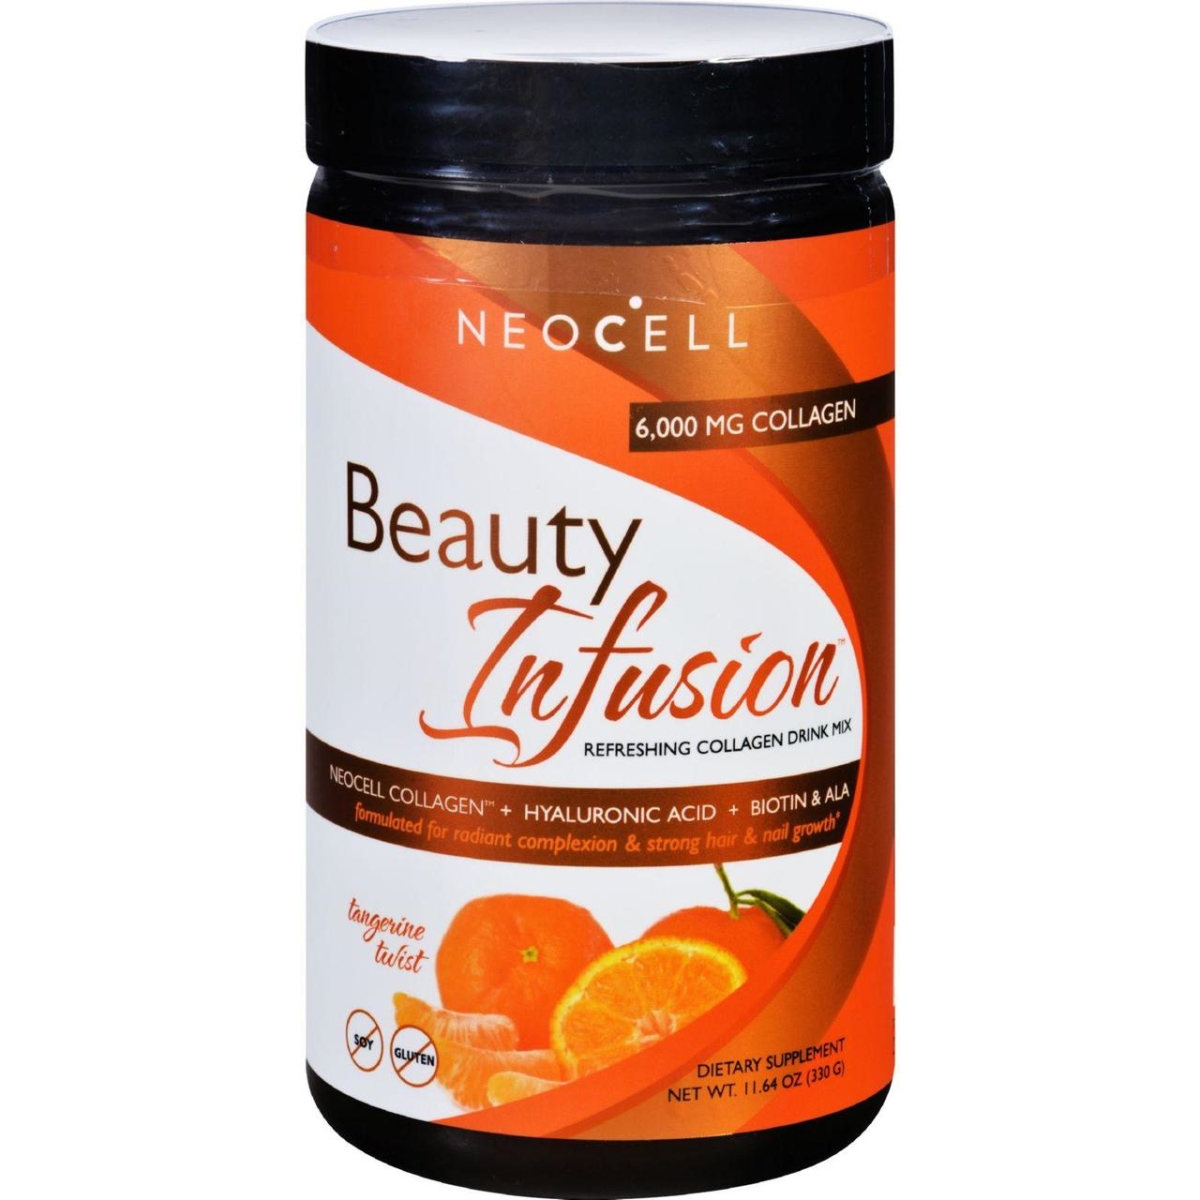 Hg1641406 11.64 Oz Collagen Drink Mix Beauty Infusion, Tangerine Twist